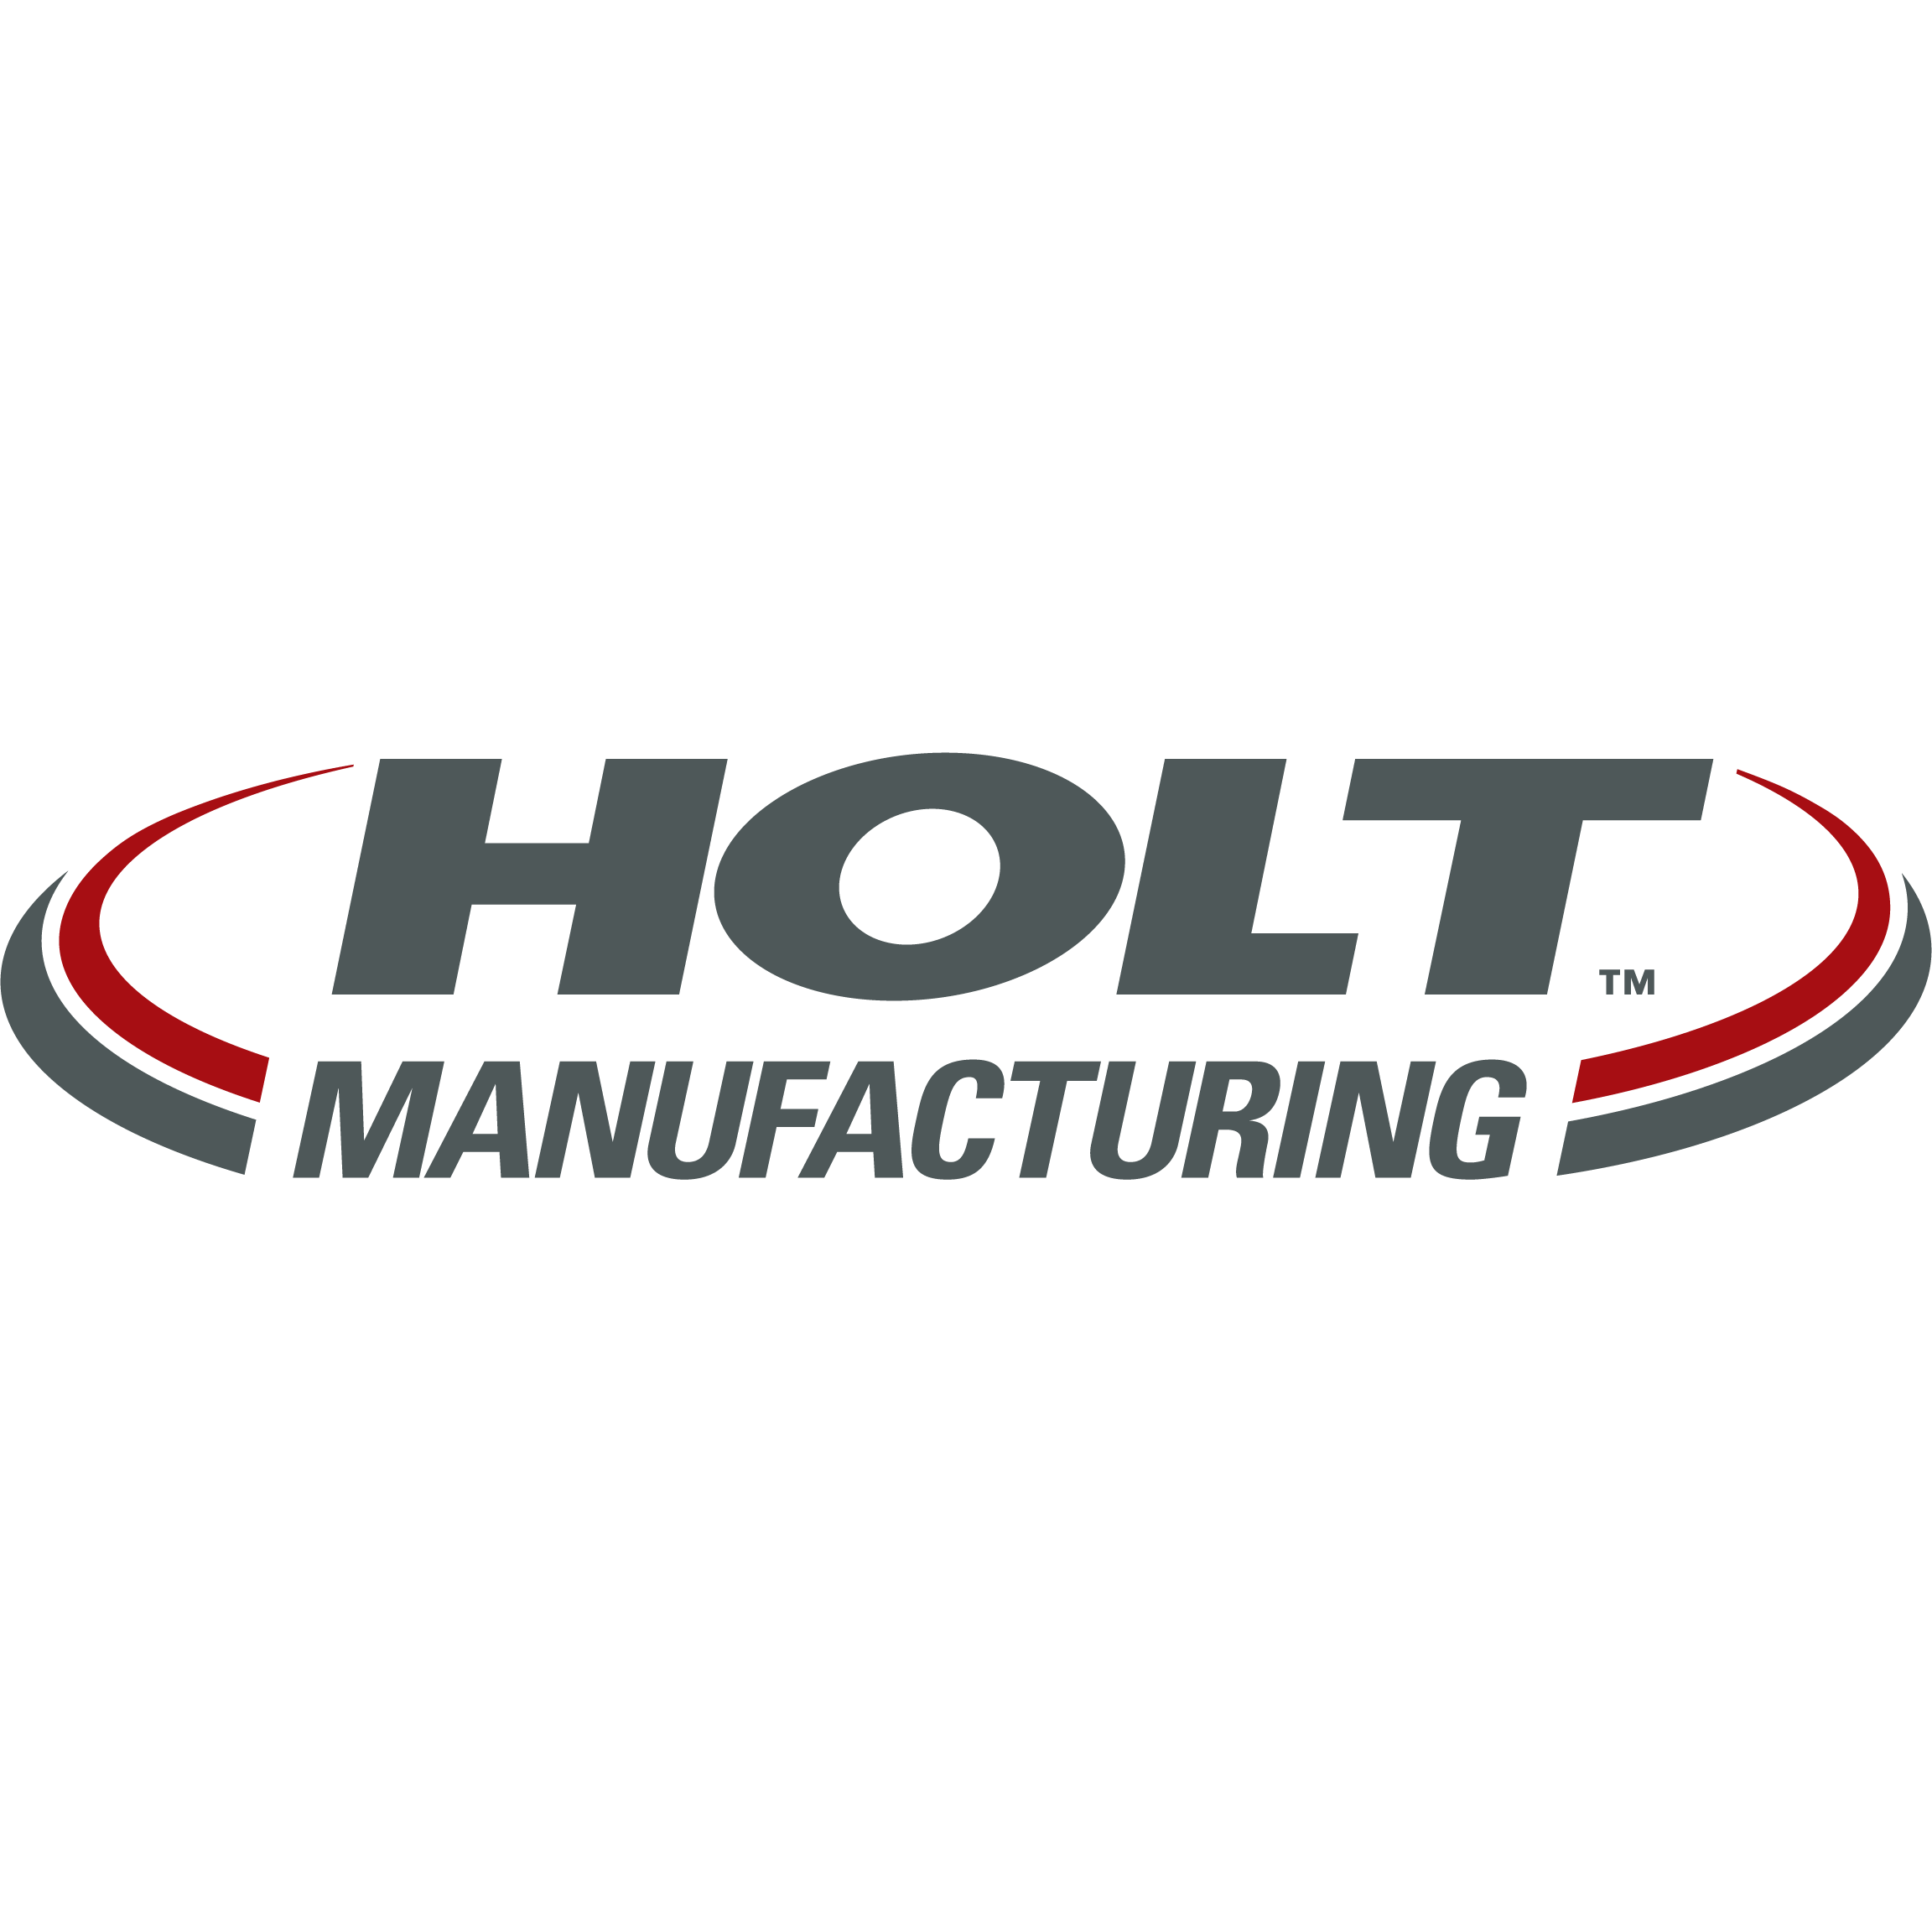 HOLT Manufacturing - Waco, TX 76712 - (254)730-6200 | ShowMeLocal.com